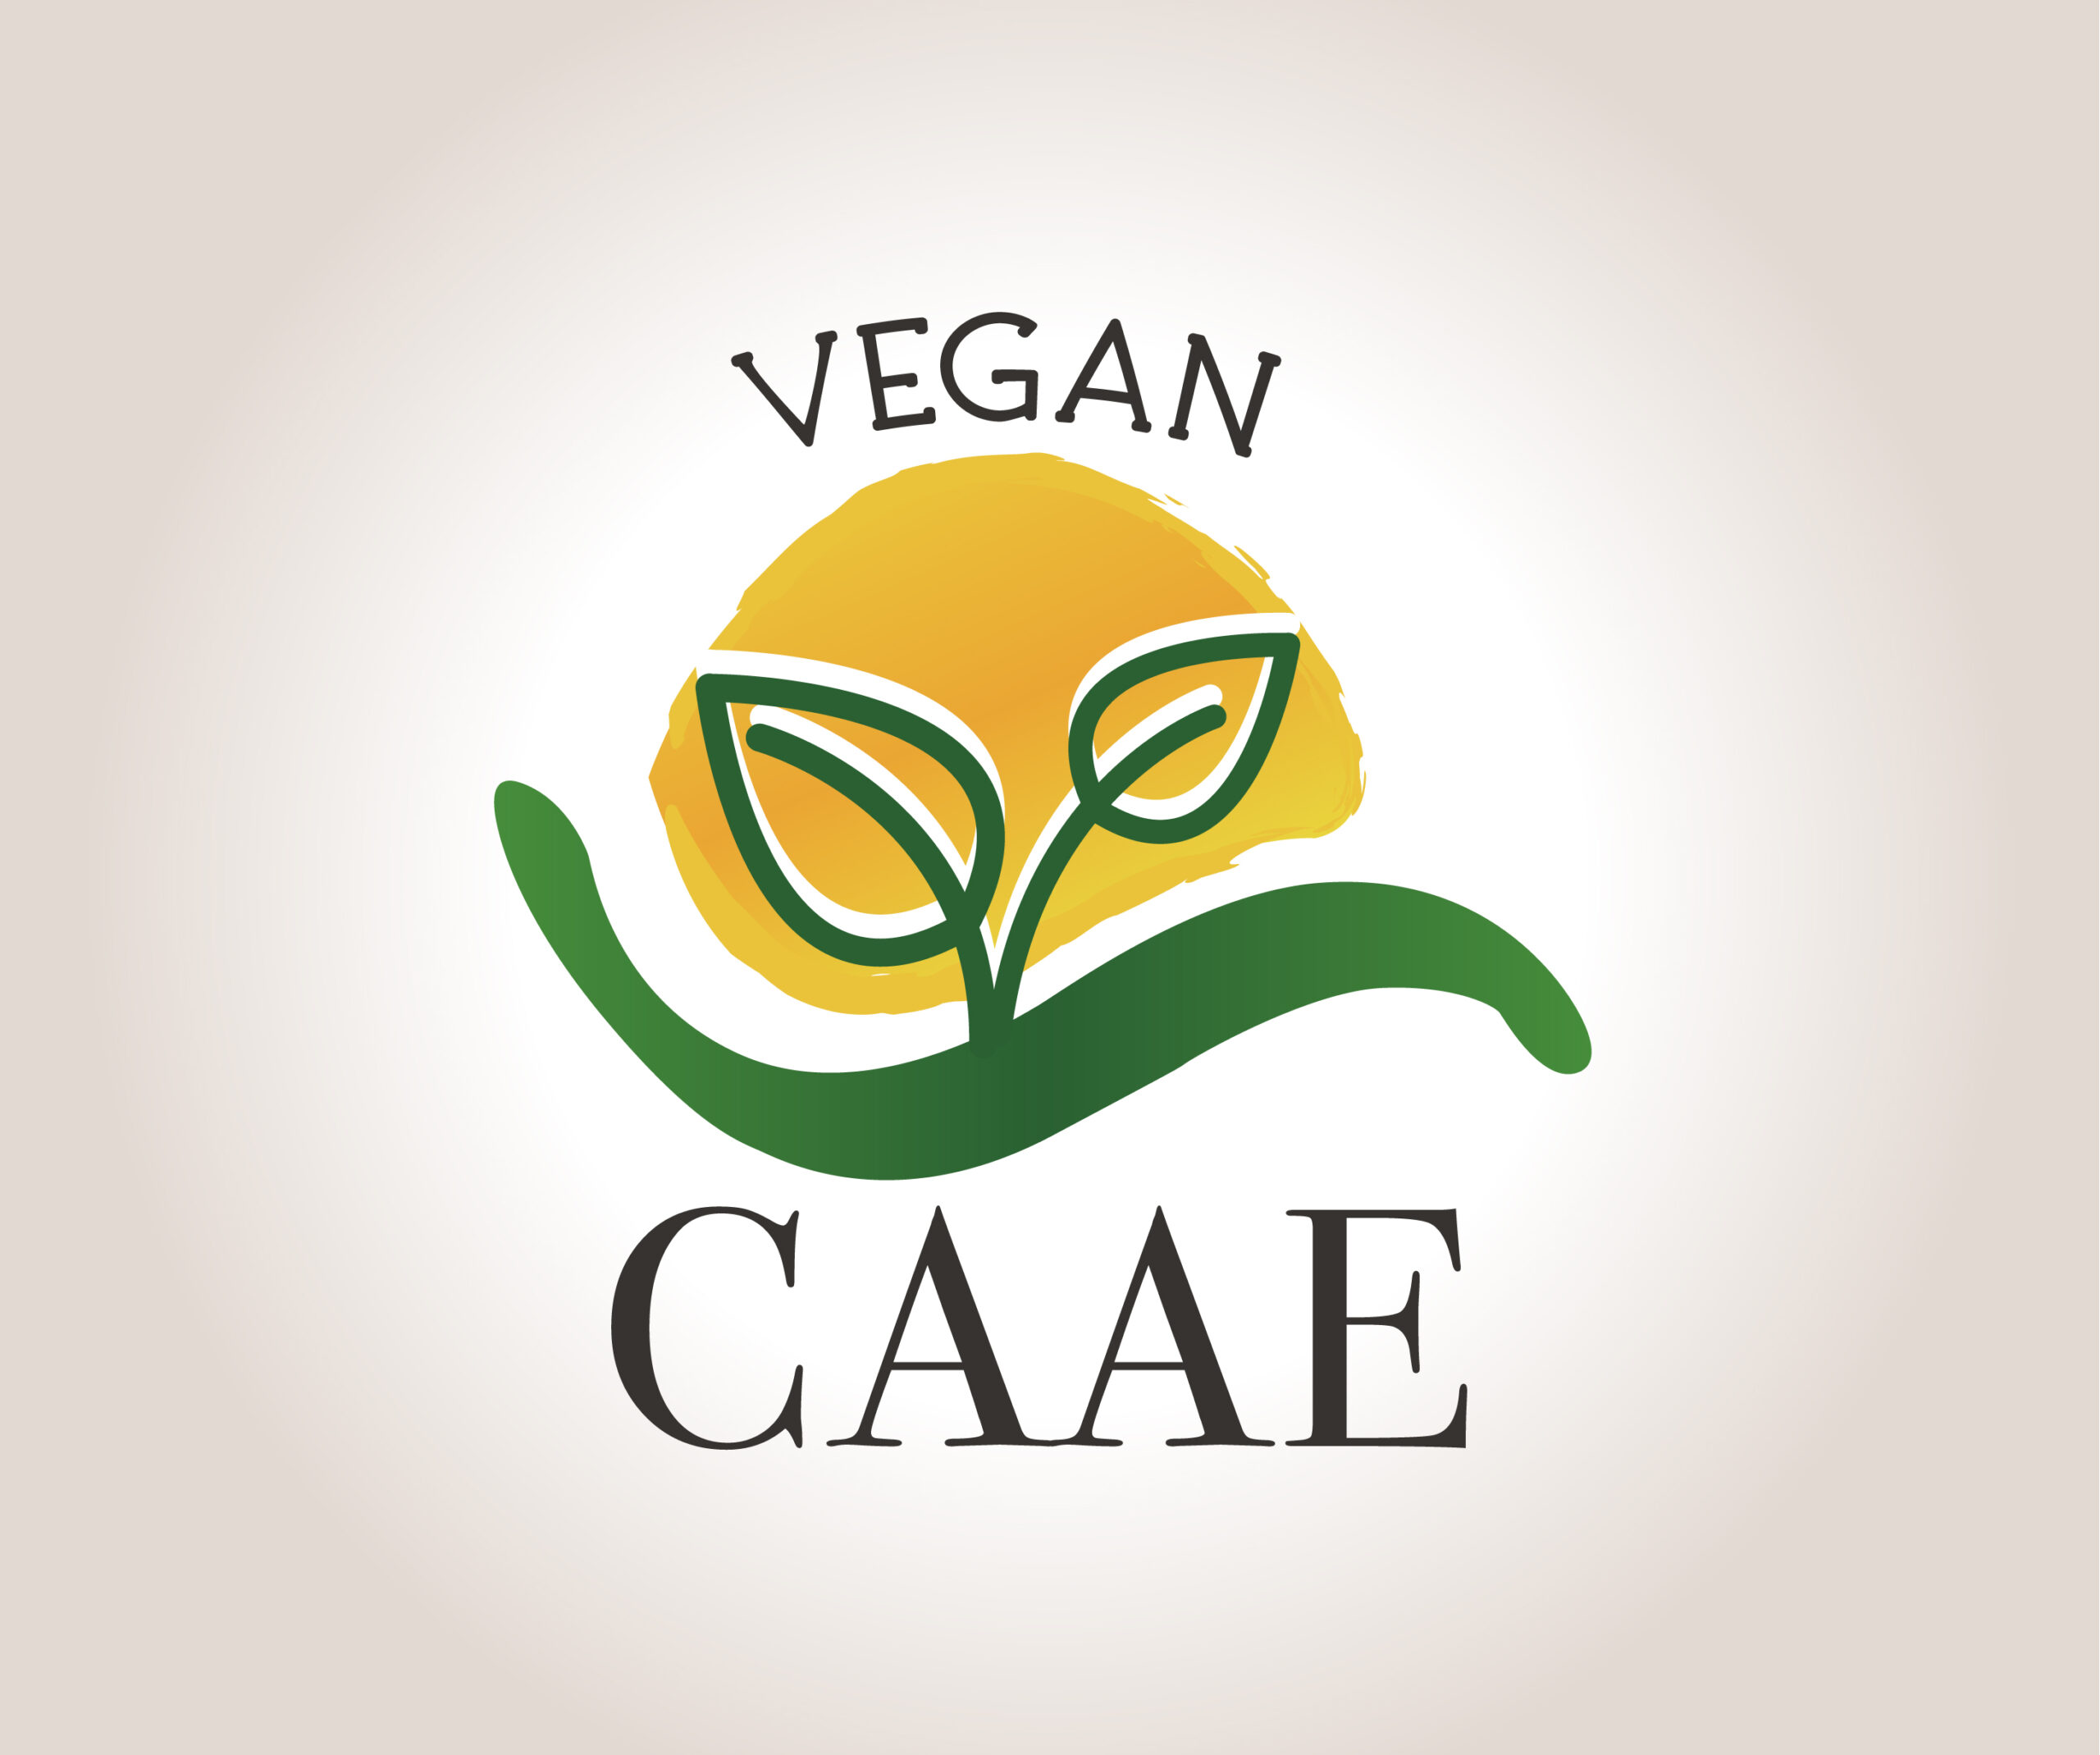 Sanifruit products certified as vegan